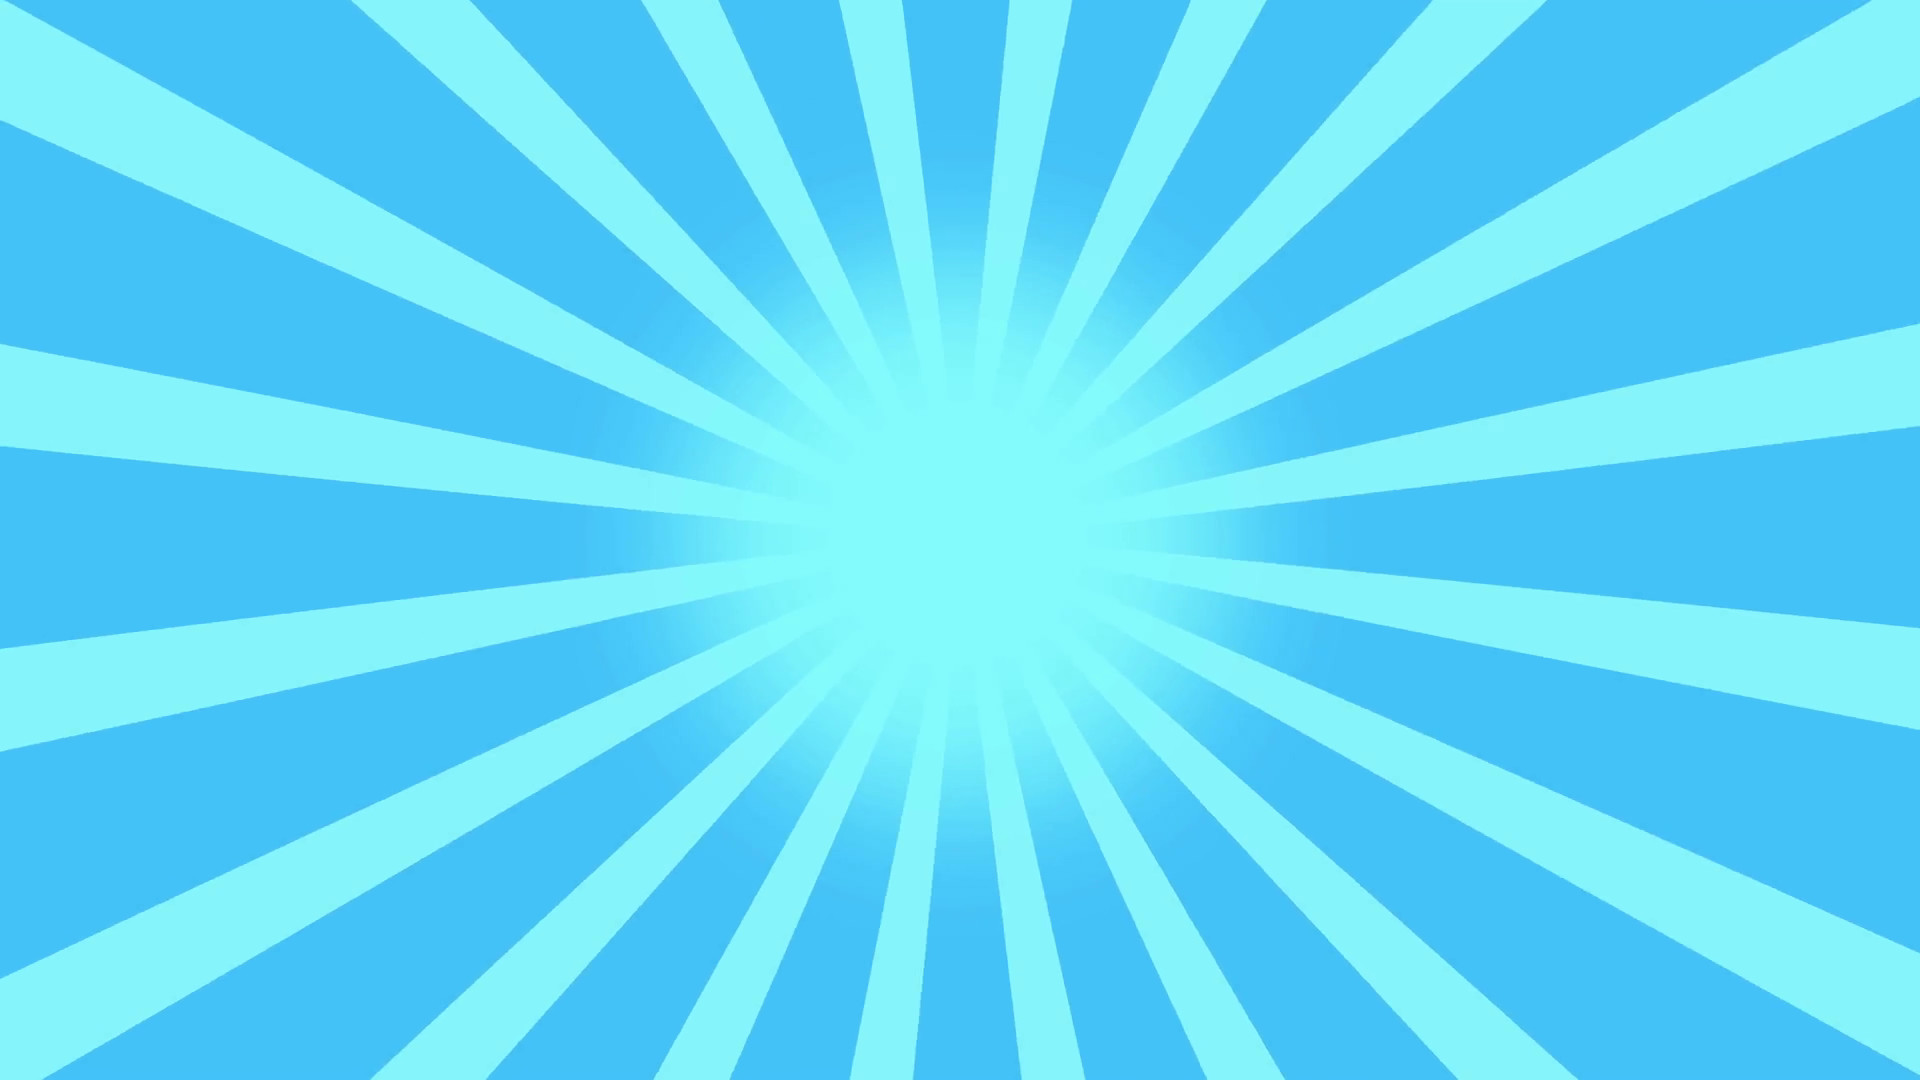 1920x1080 Blue Burst vector background. Cartoon sun light over Blue sky Background  with space for your logo or title, Nice sunburst vintage style sun - Retro  Pattern. ...